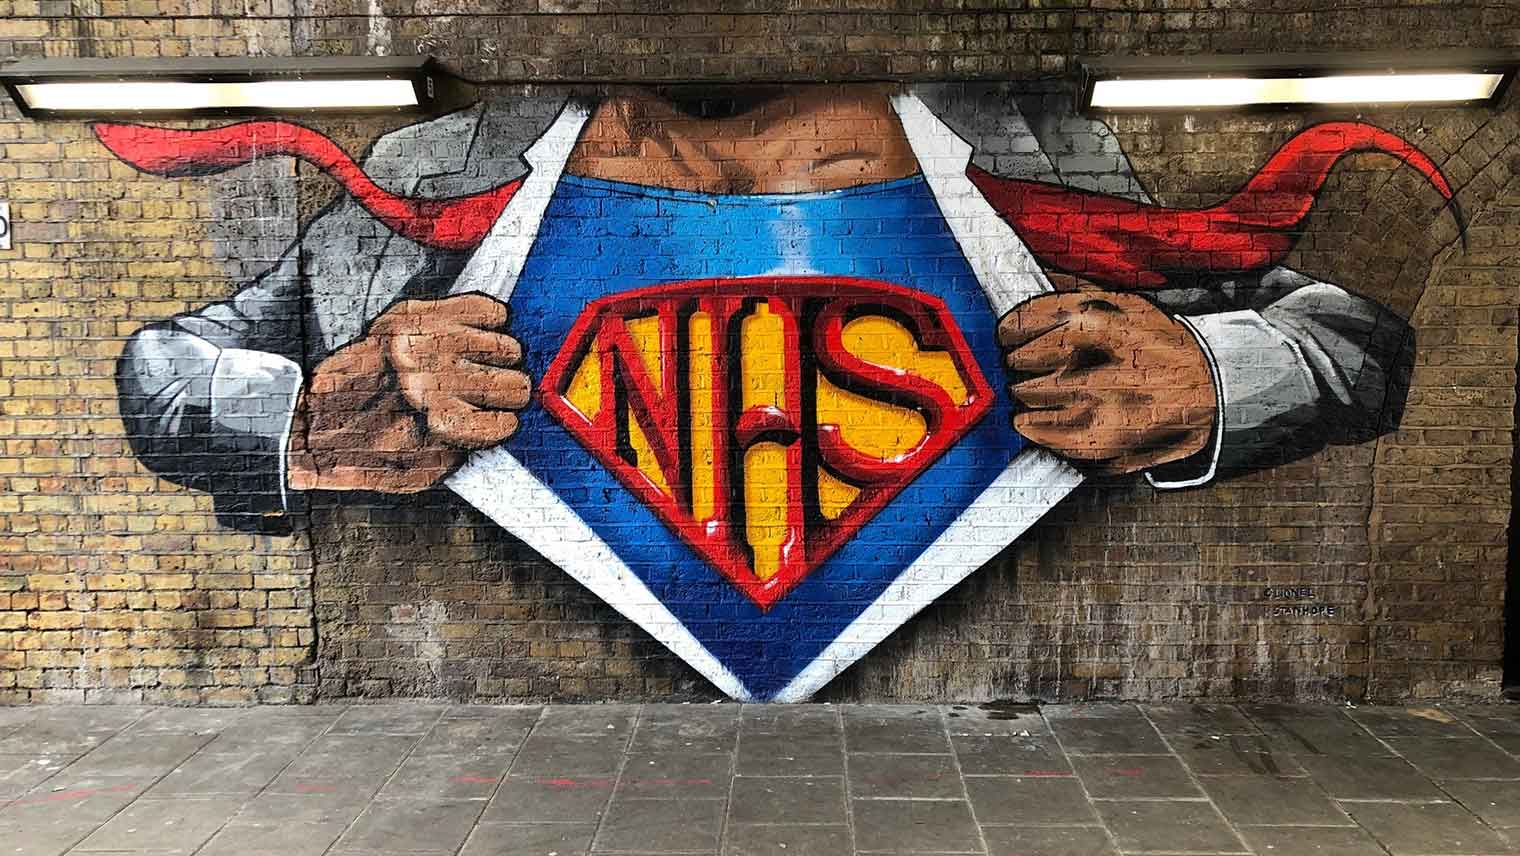 Cornwall Road, London, street art